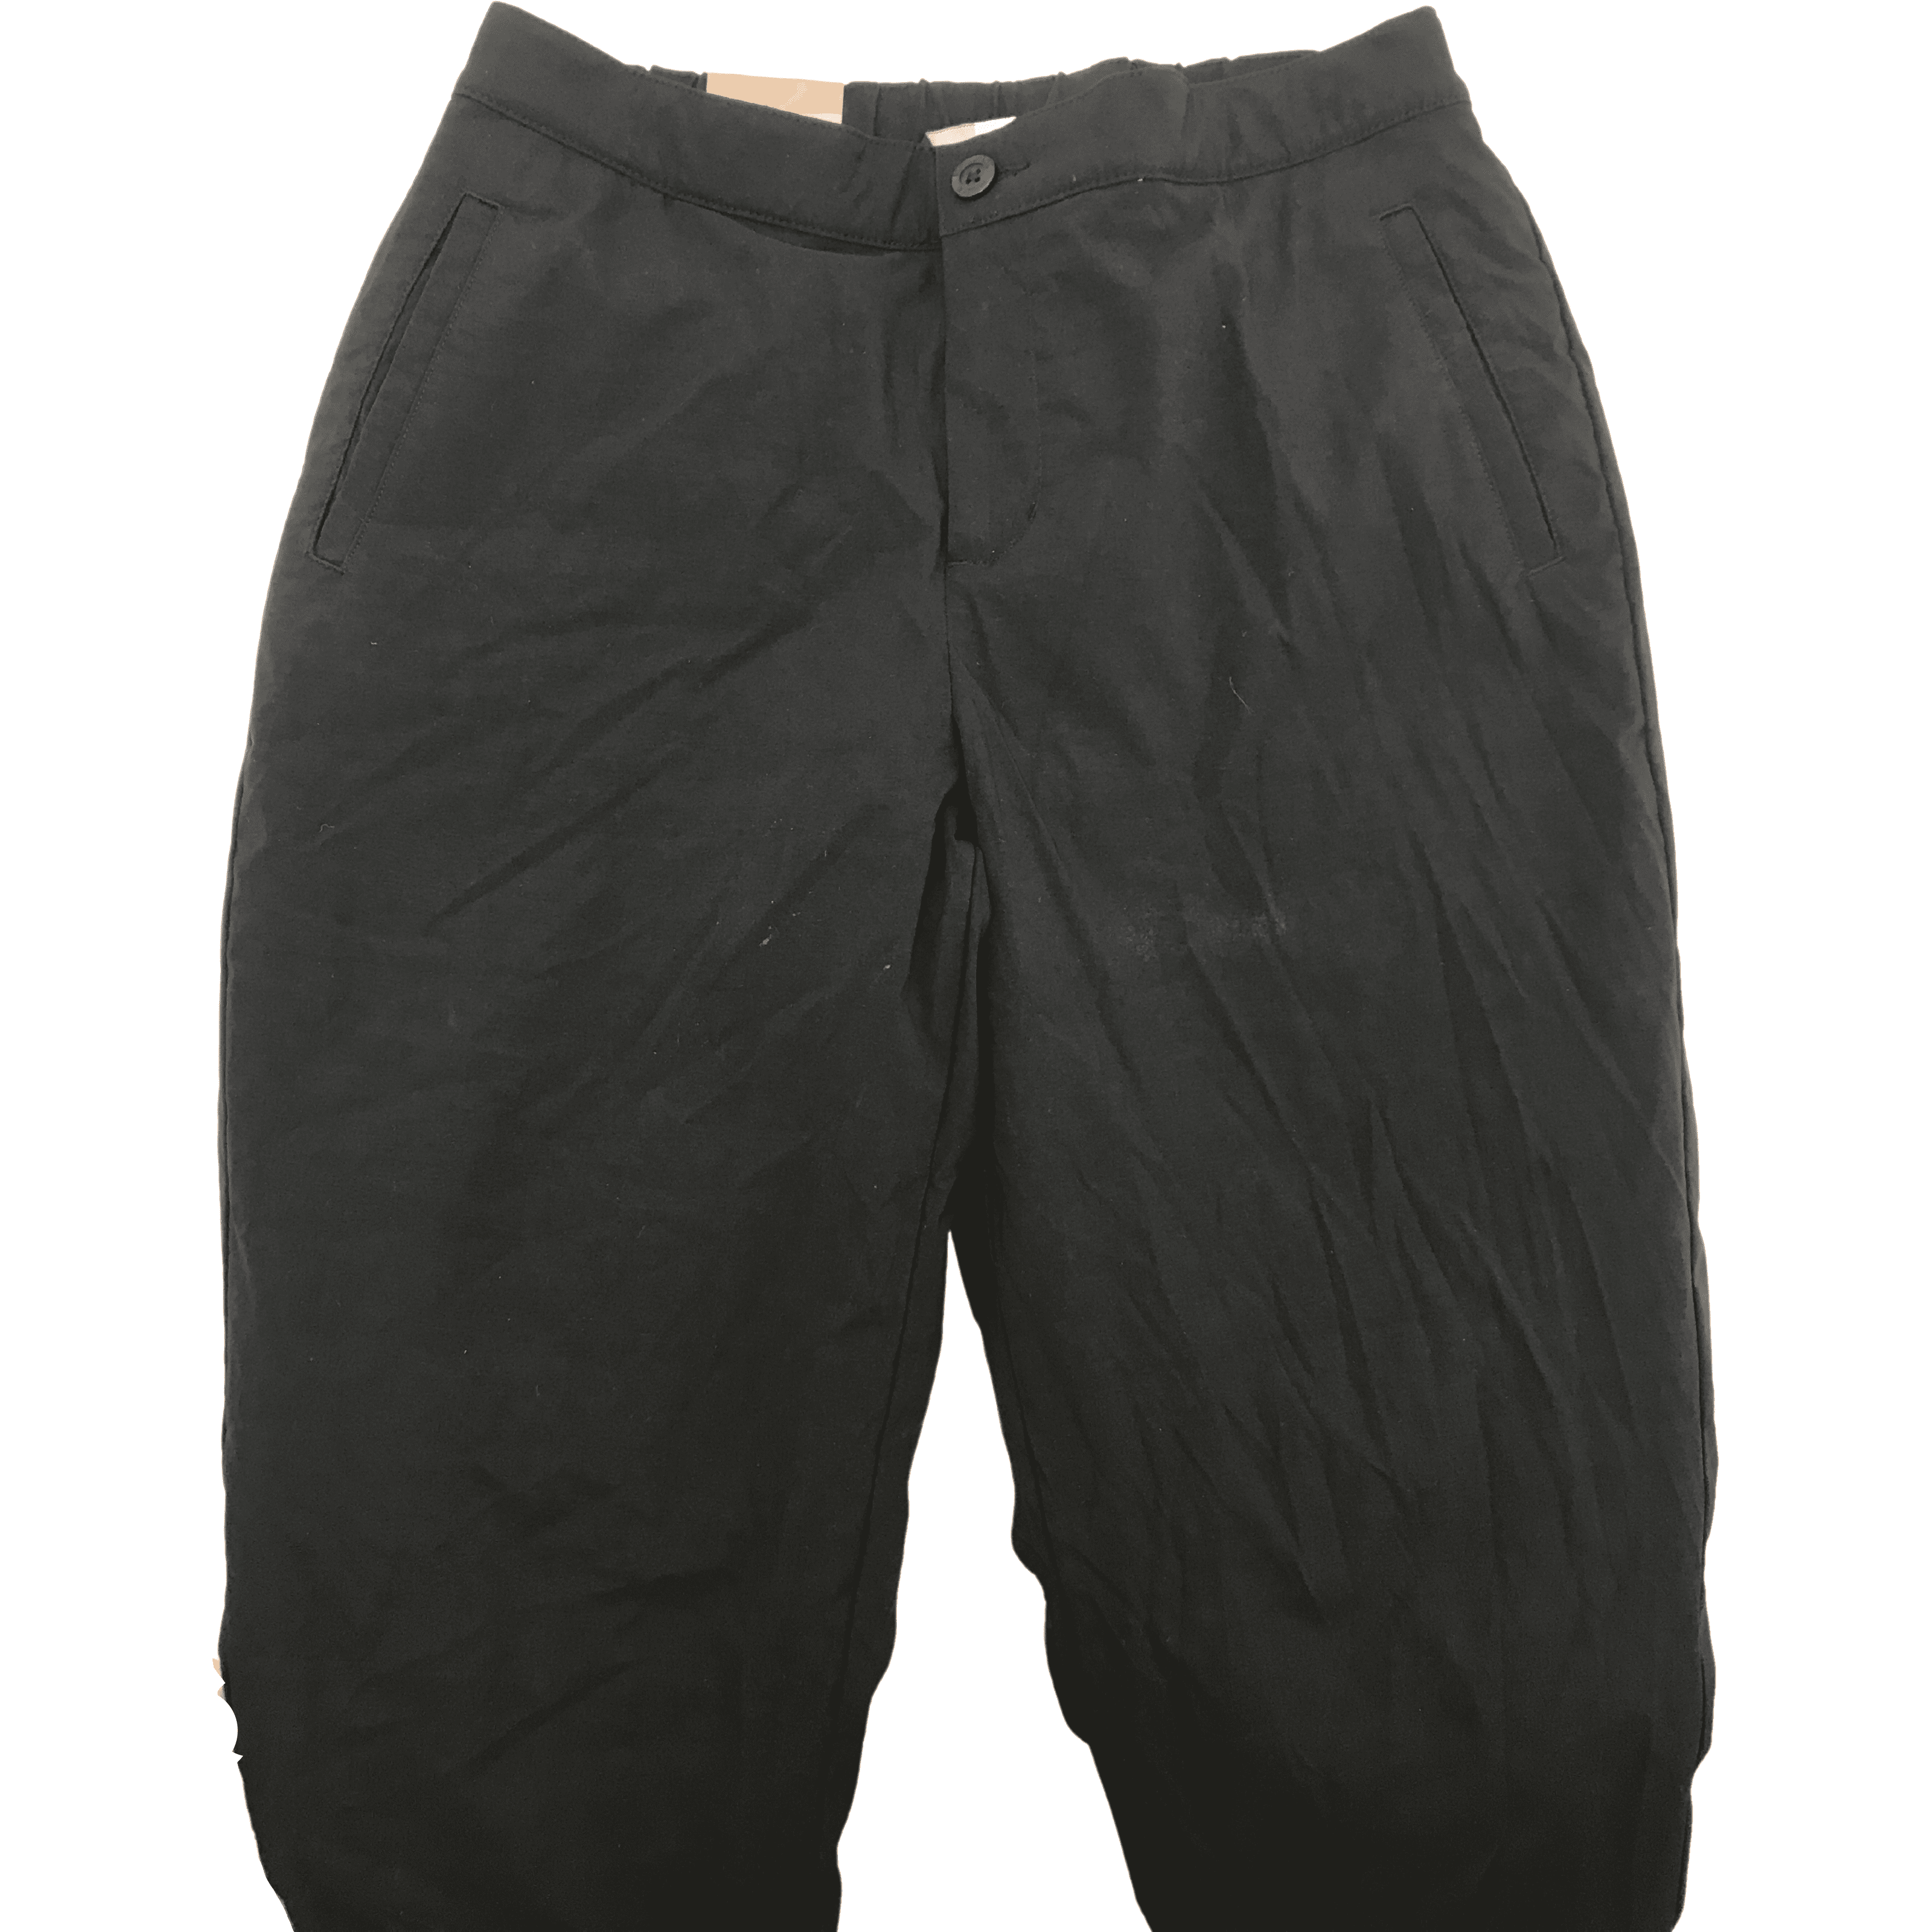 Ladies Stormpack Windproof Micro Fleece Lined Pants Size XXL 2X Gray NWT